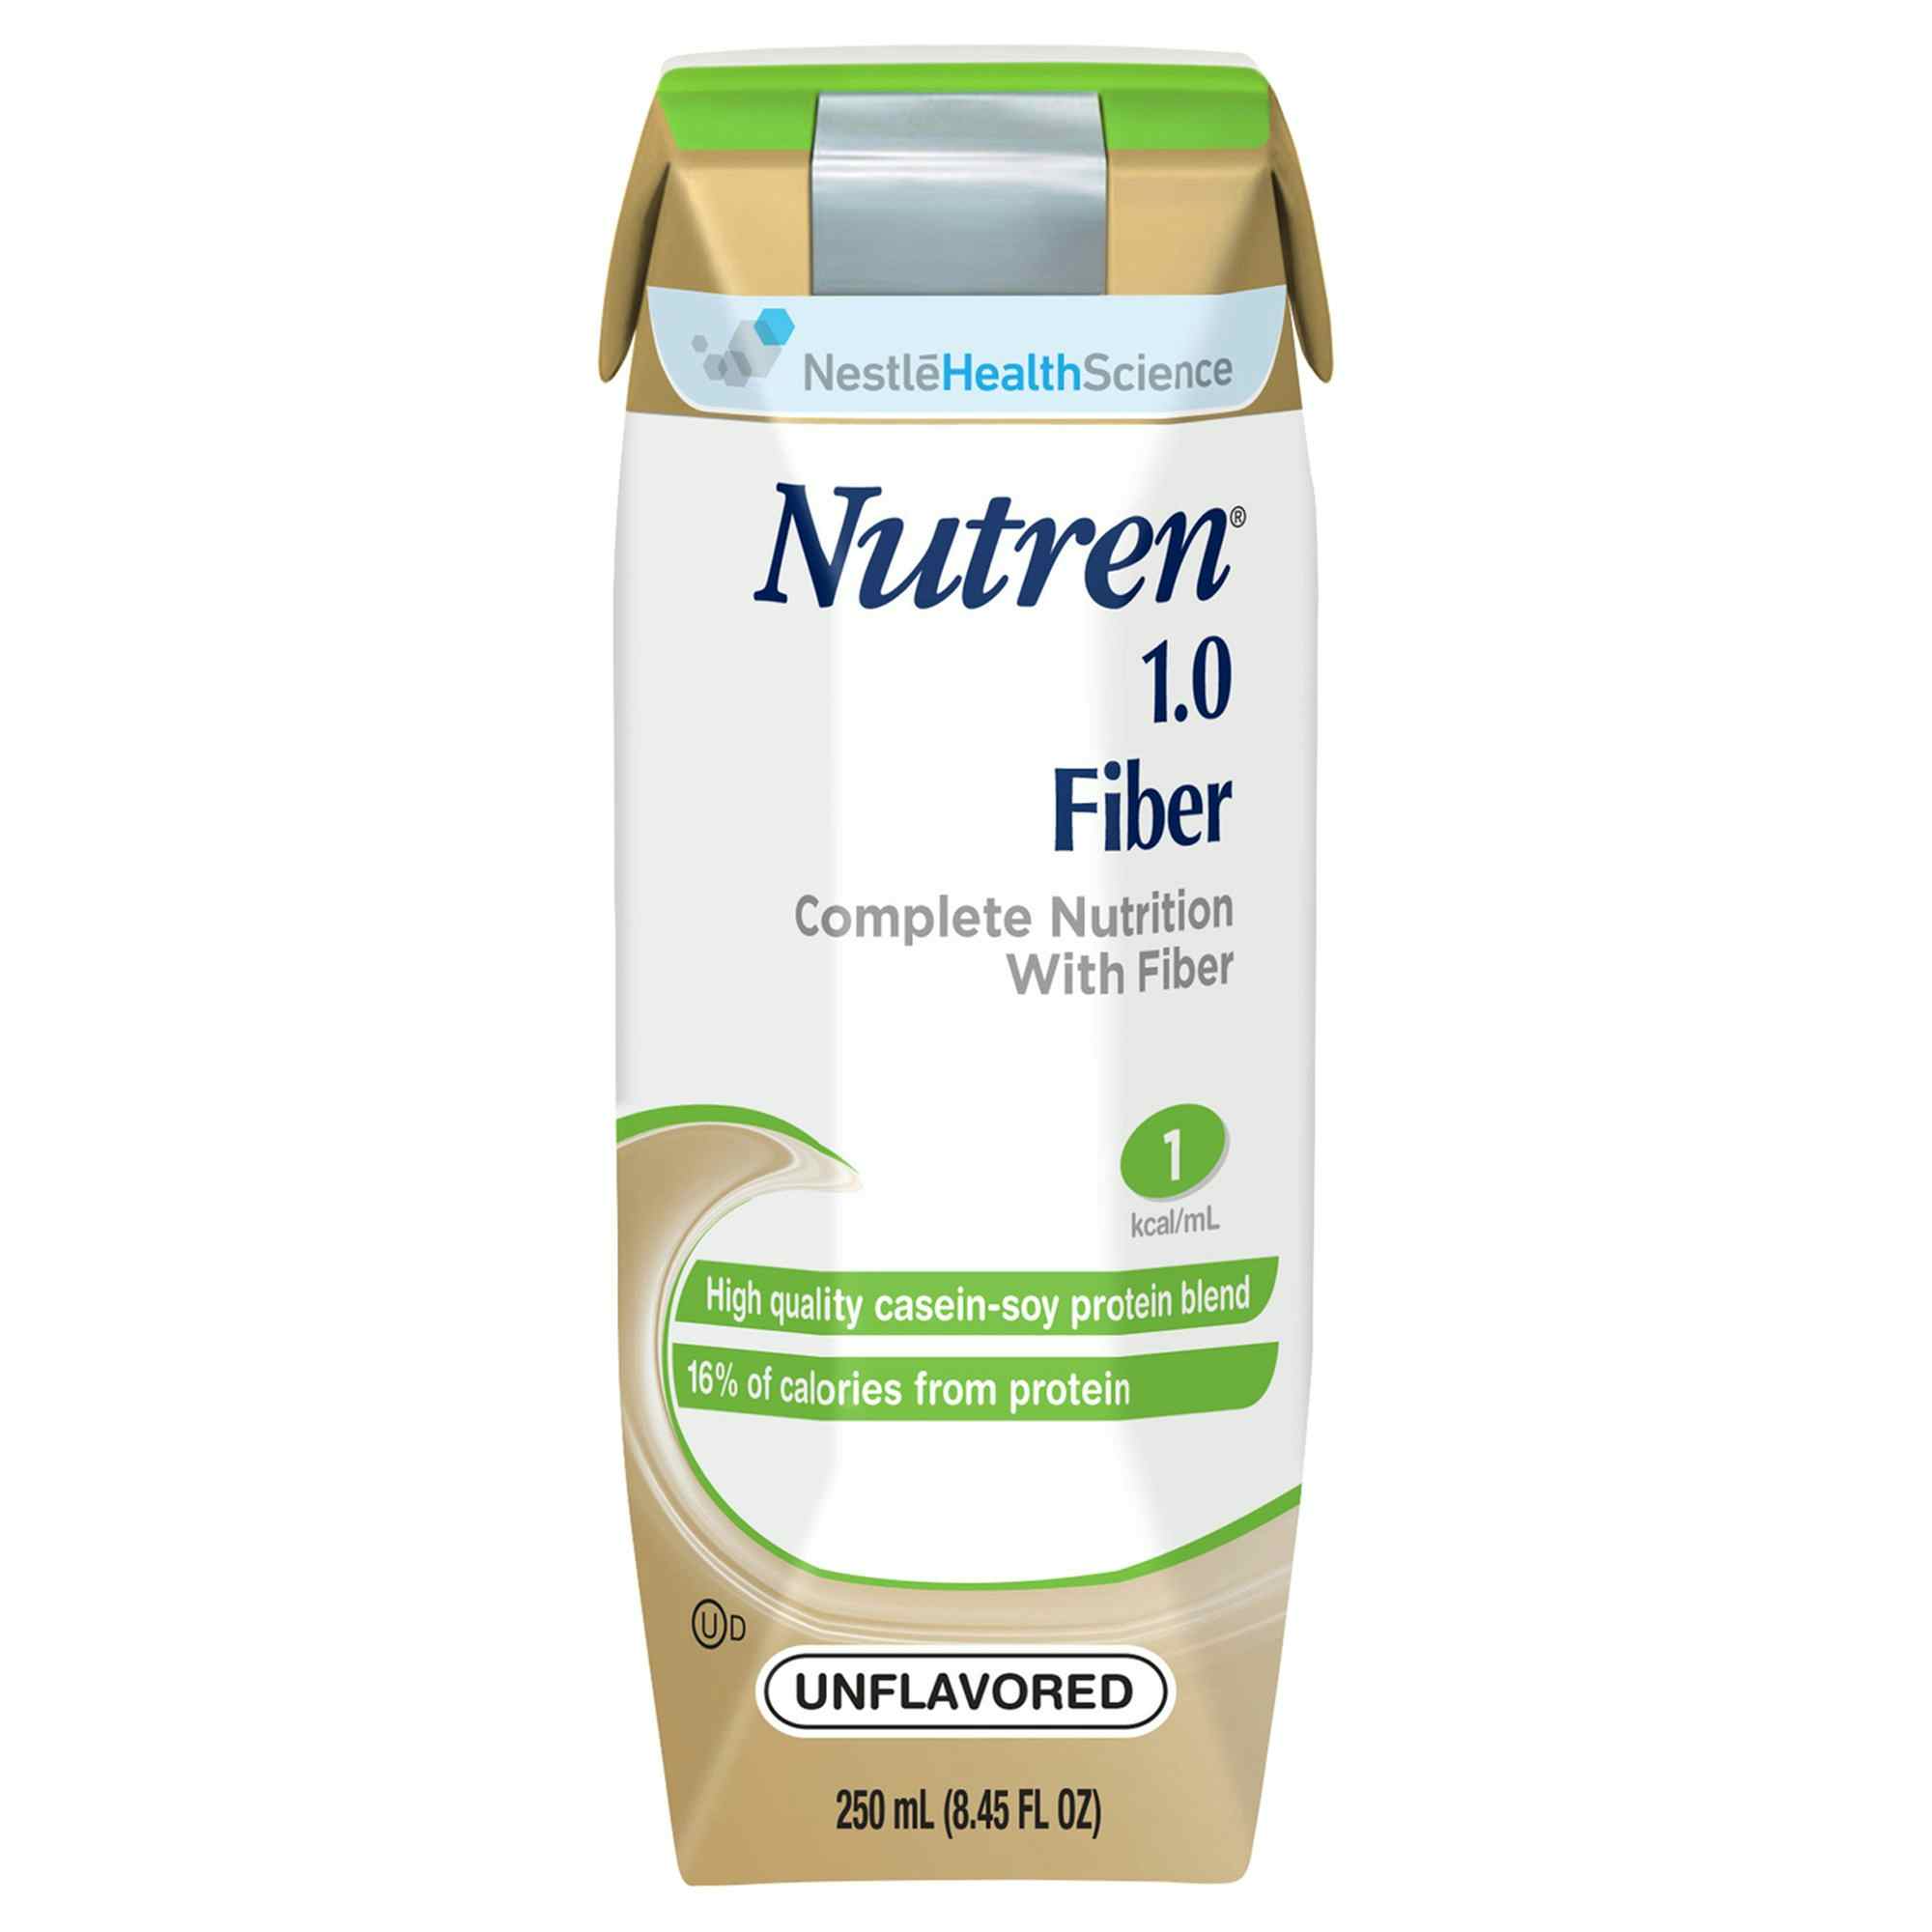 Nestle HealthScience Nutren 1.0 Fiber Complete Nutrition with Fiber Tube Feeding Formula, 8.45 oz., 00798716160568, Case of 24